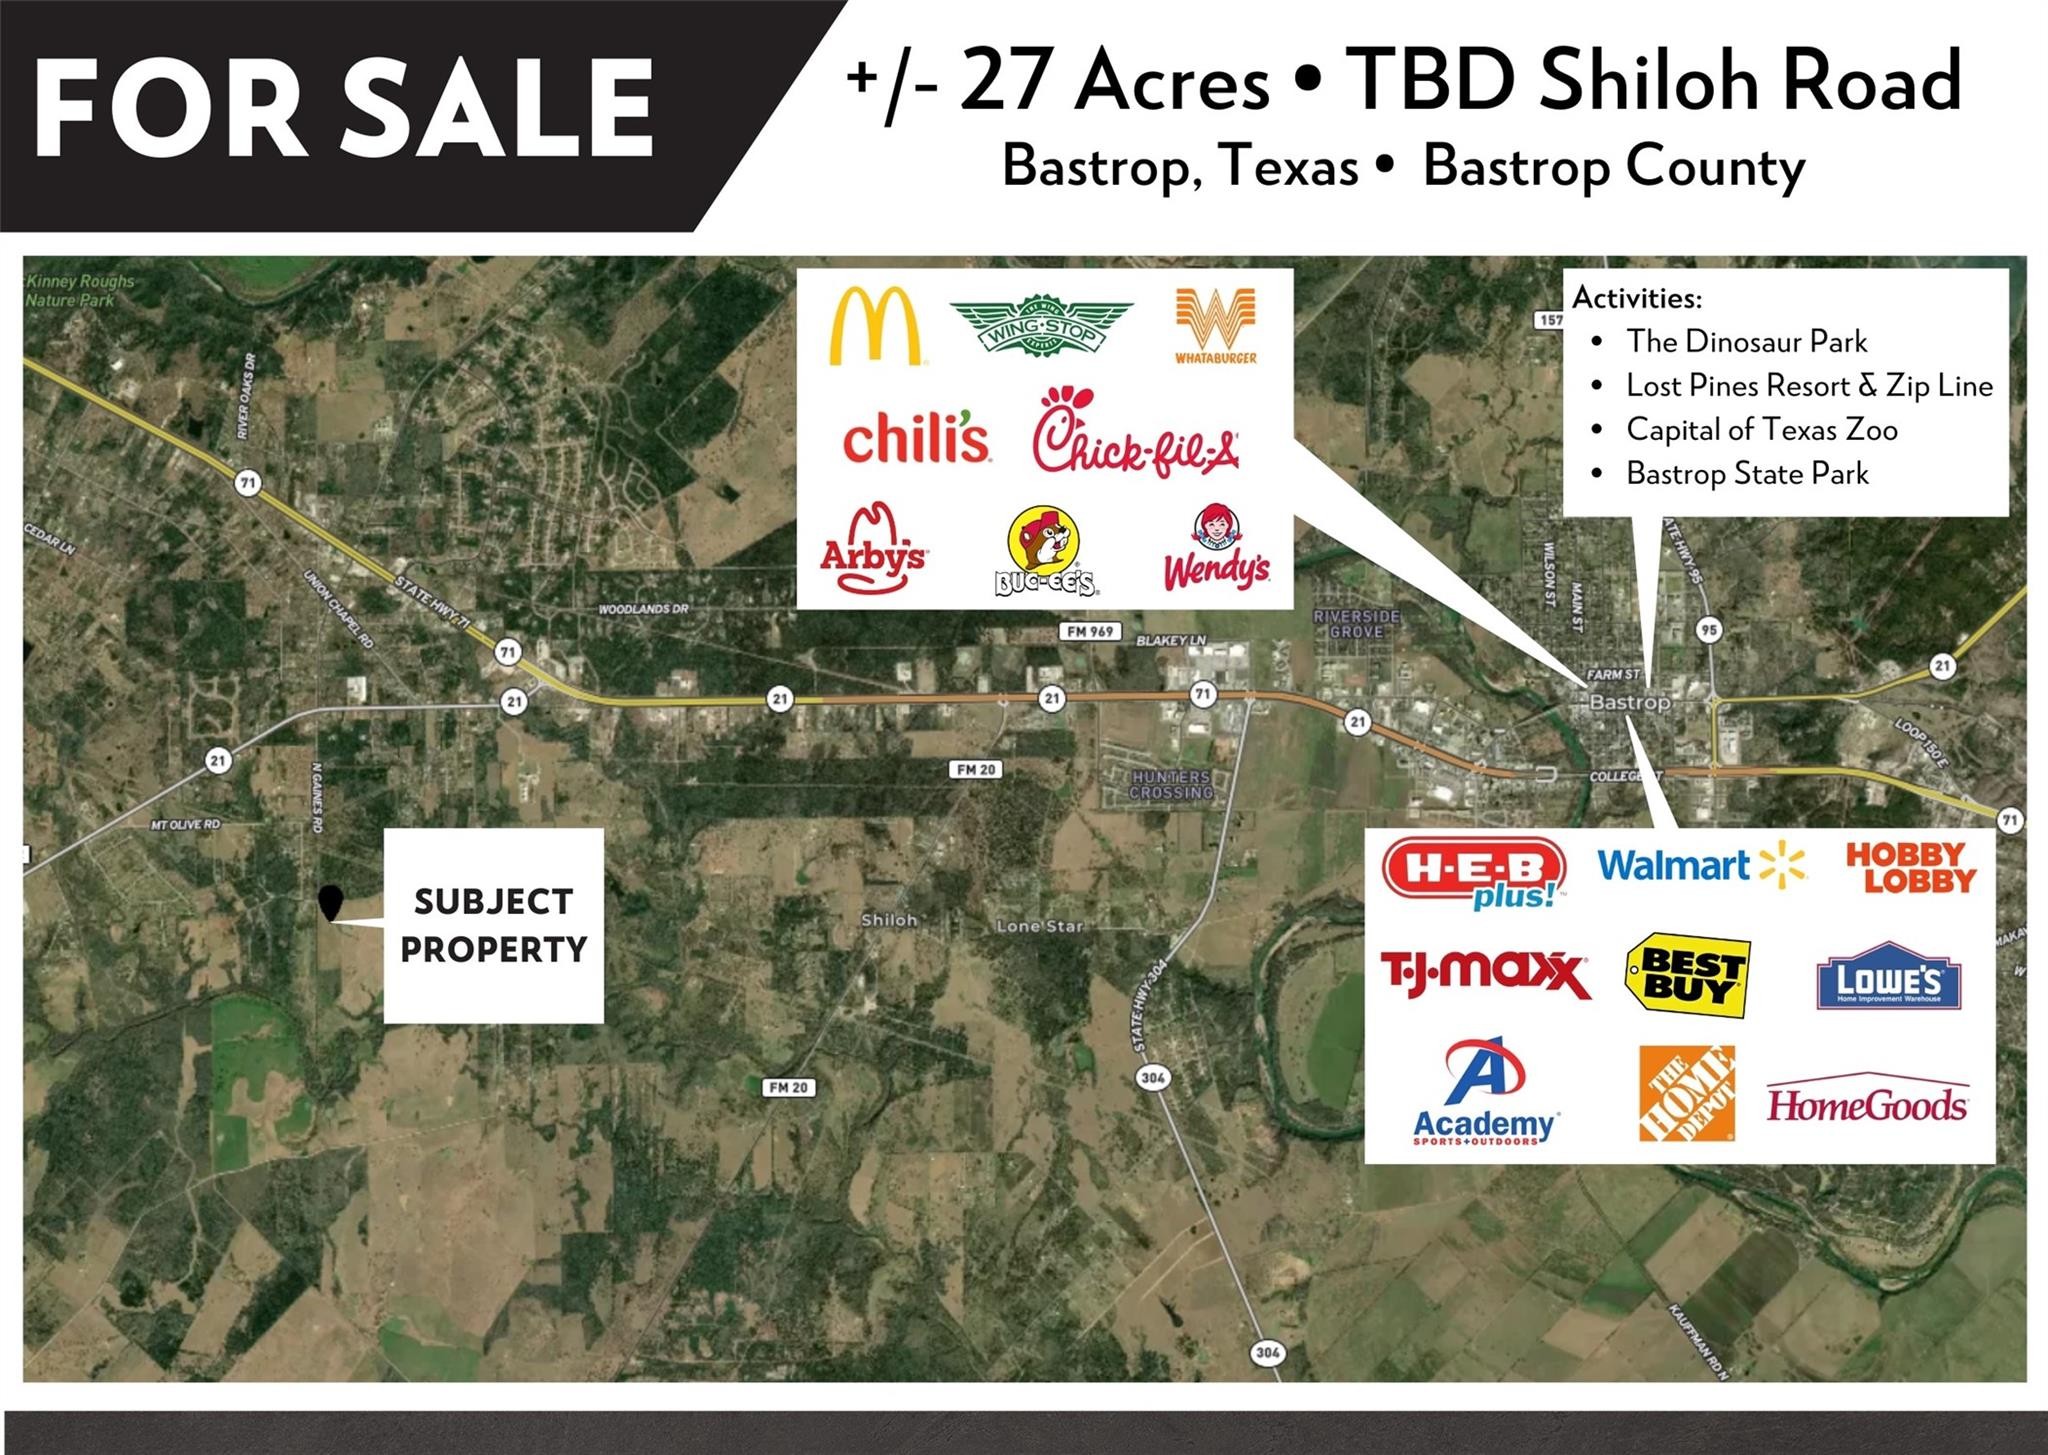 30. Tbd (27 Acres) Shiloh Rd